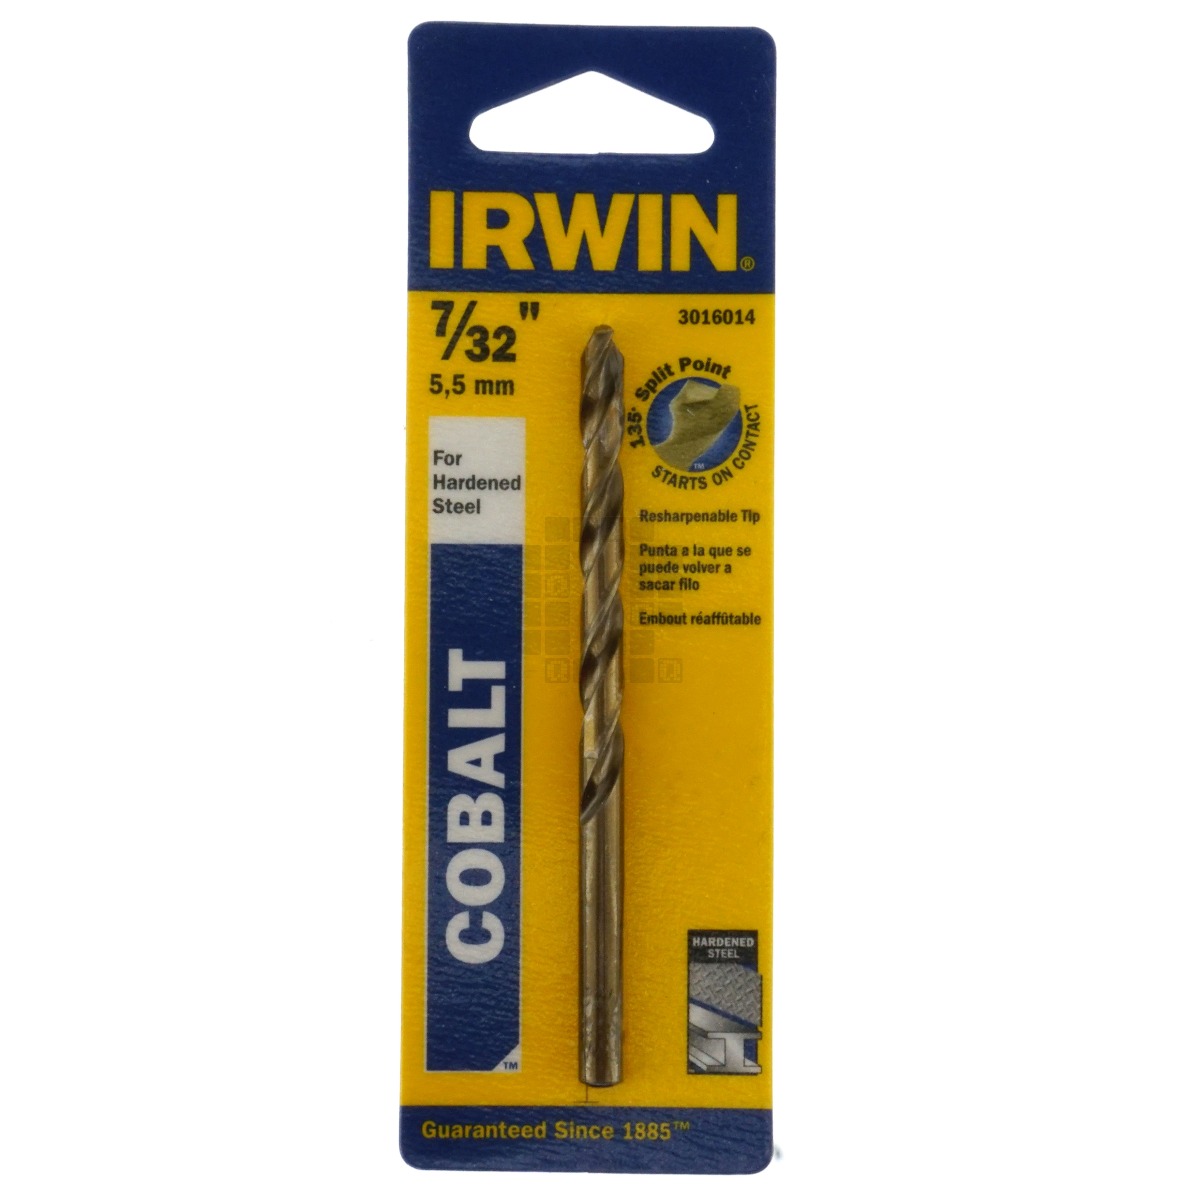 Irwin 3016014 7/32" Cobalt 135° Split Point Drill Bit